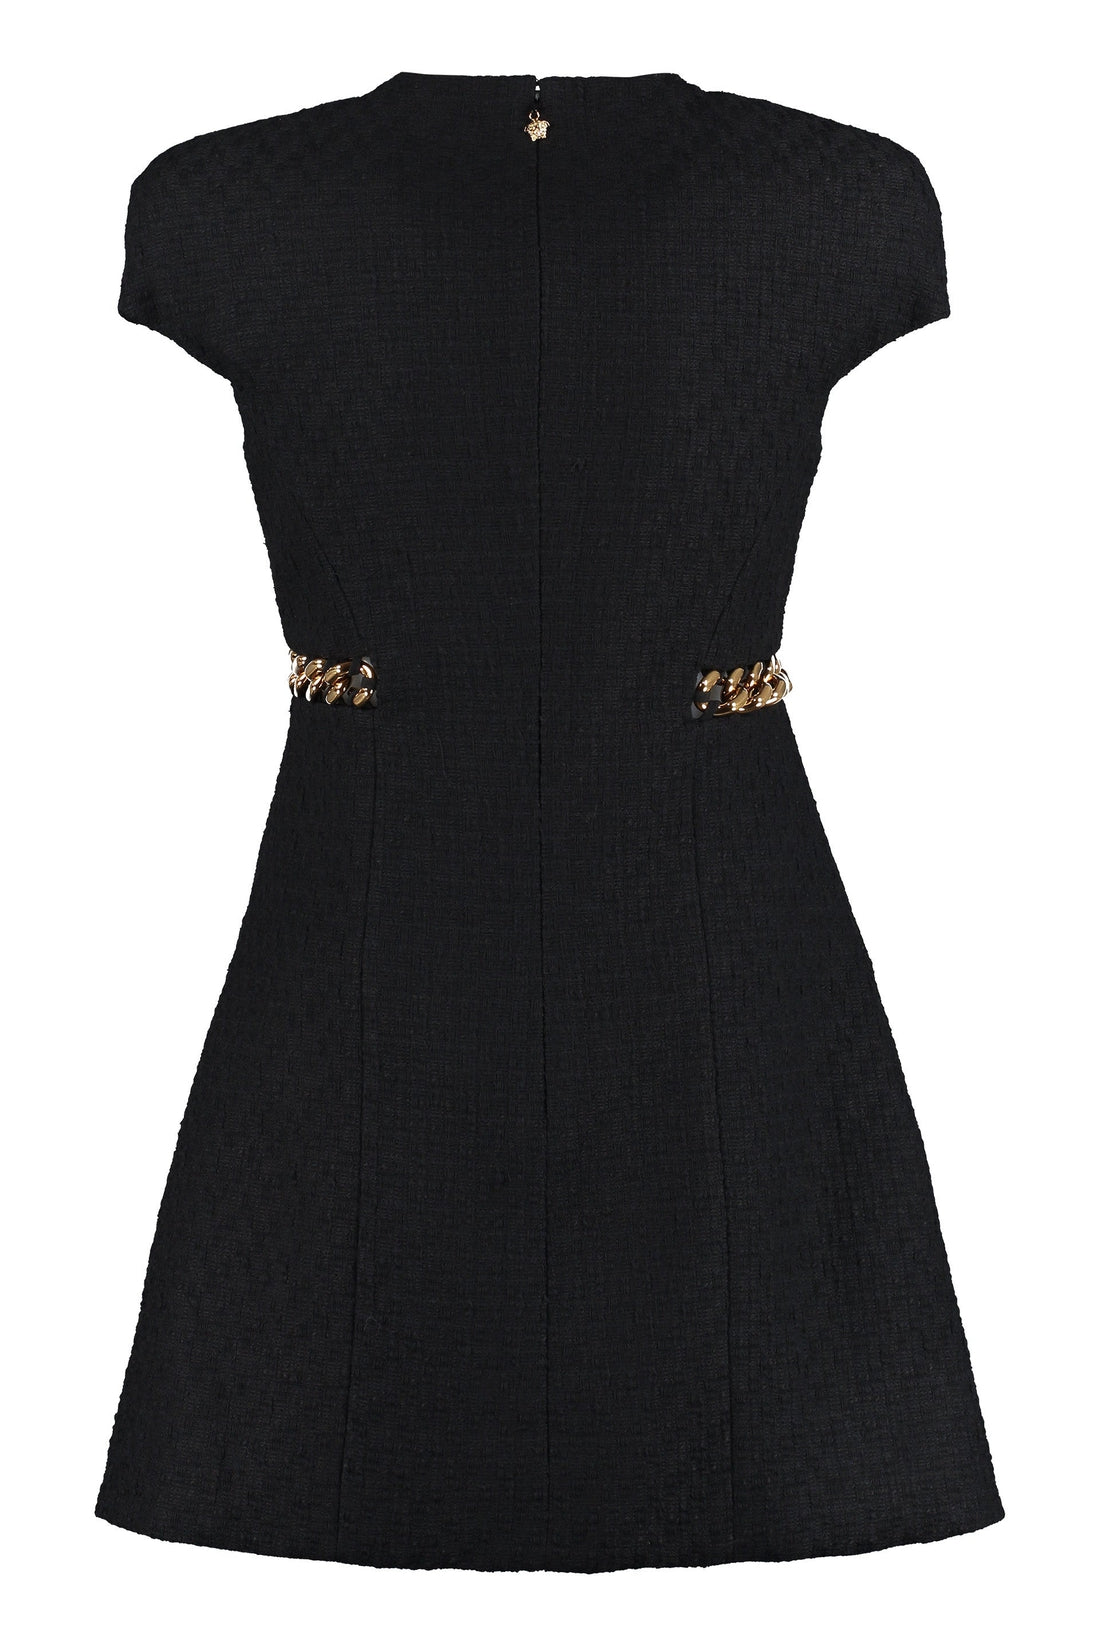 Versace-OUTLET-SALE-Tweed sheath dress-ARCHIVIST